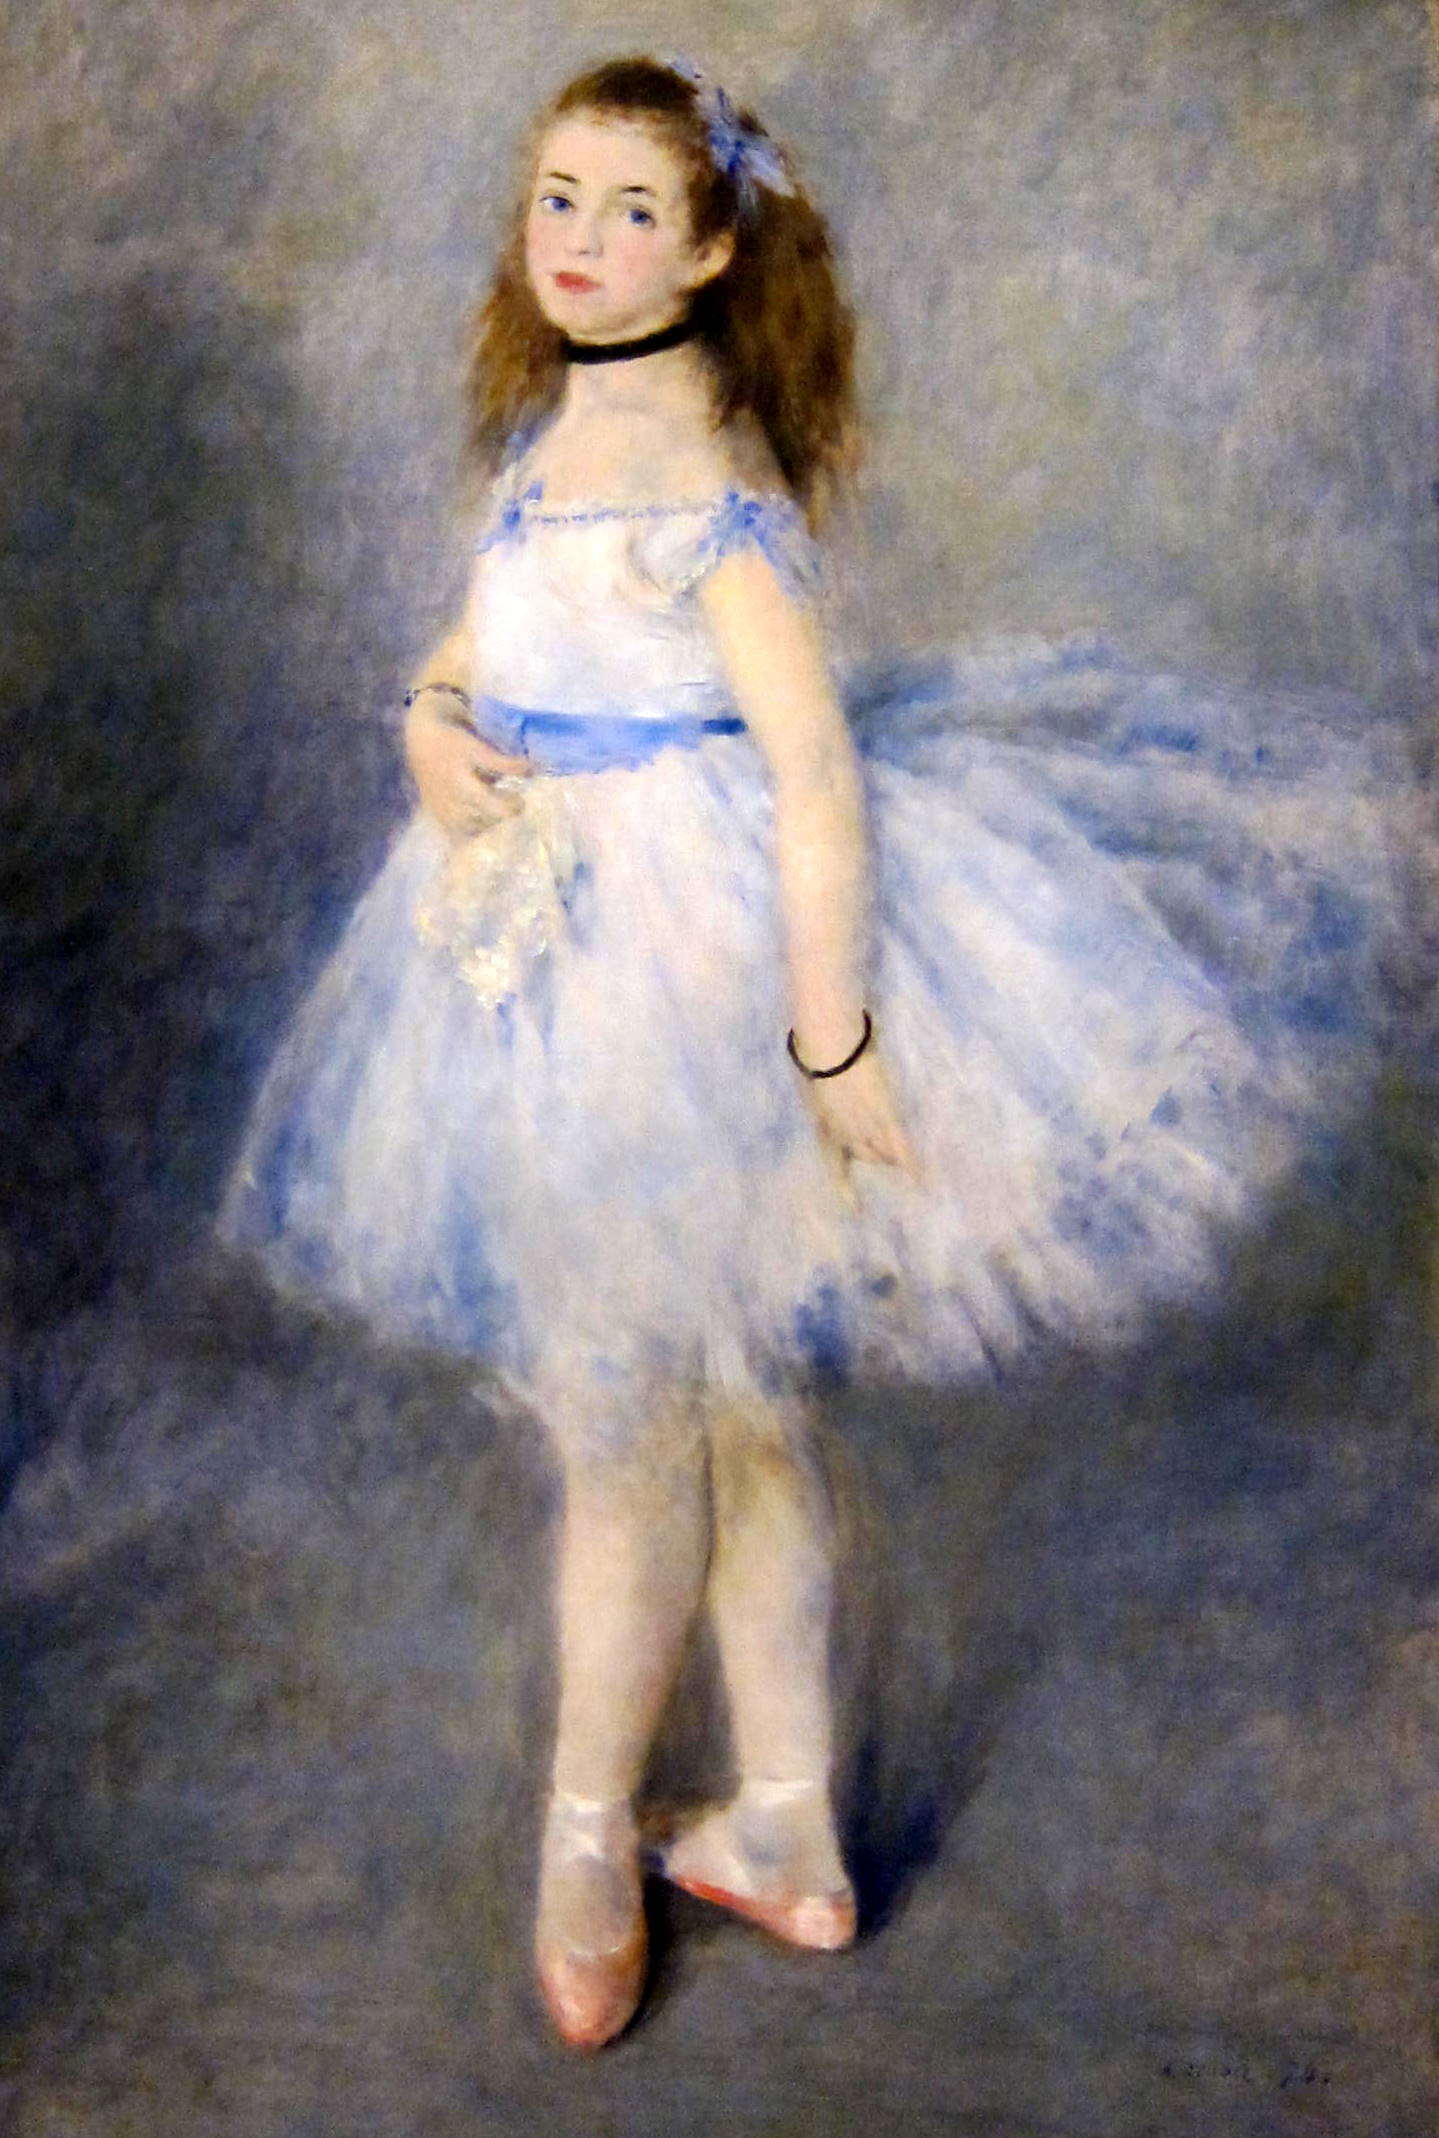 The Dancer by Pierre-Auguste Renoir - 1874 - 142.5 x 94.5 cm National Gallery of Art